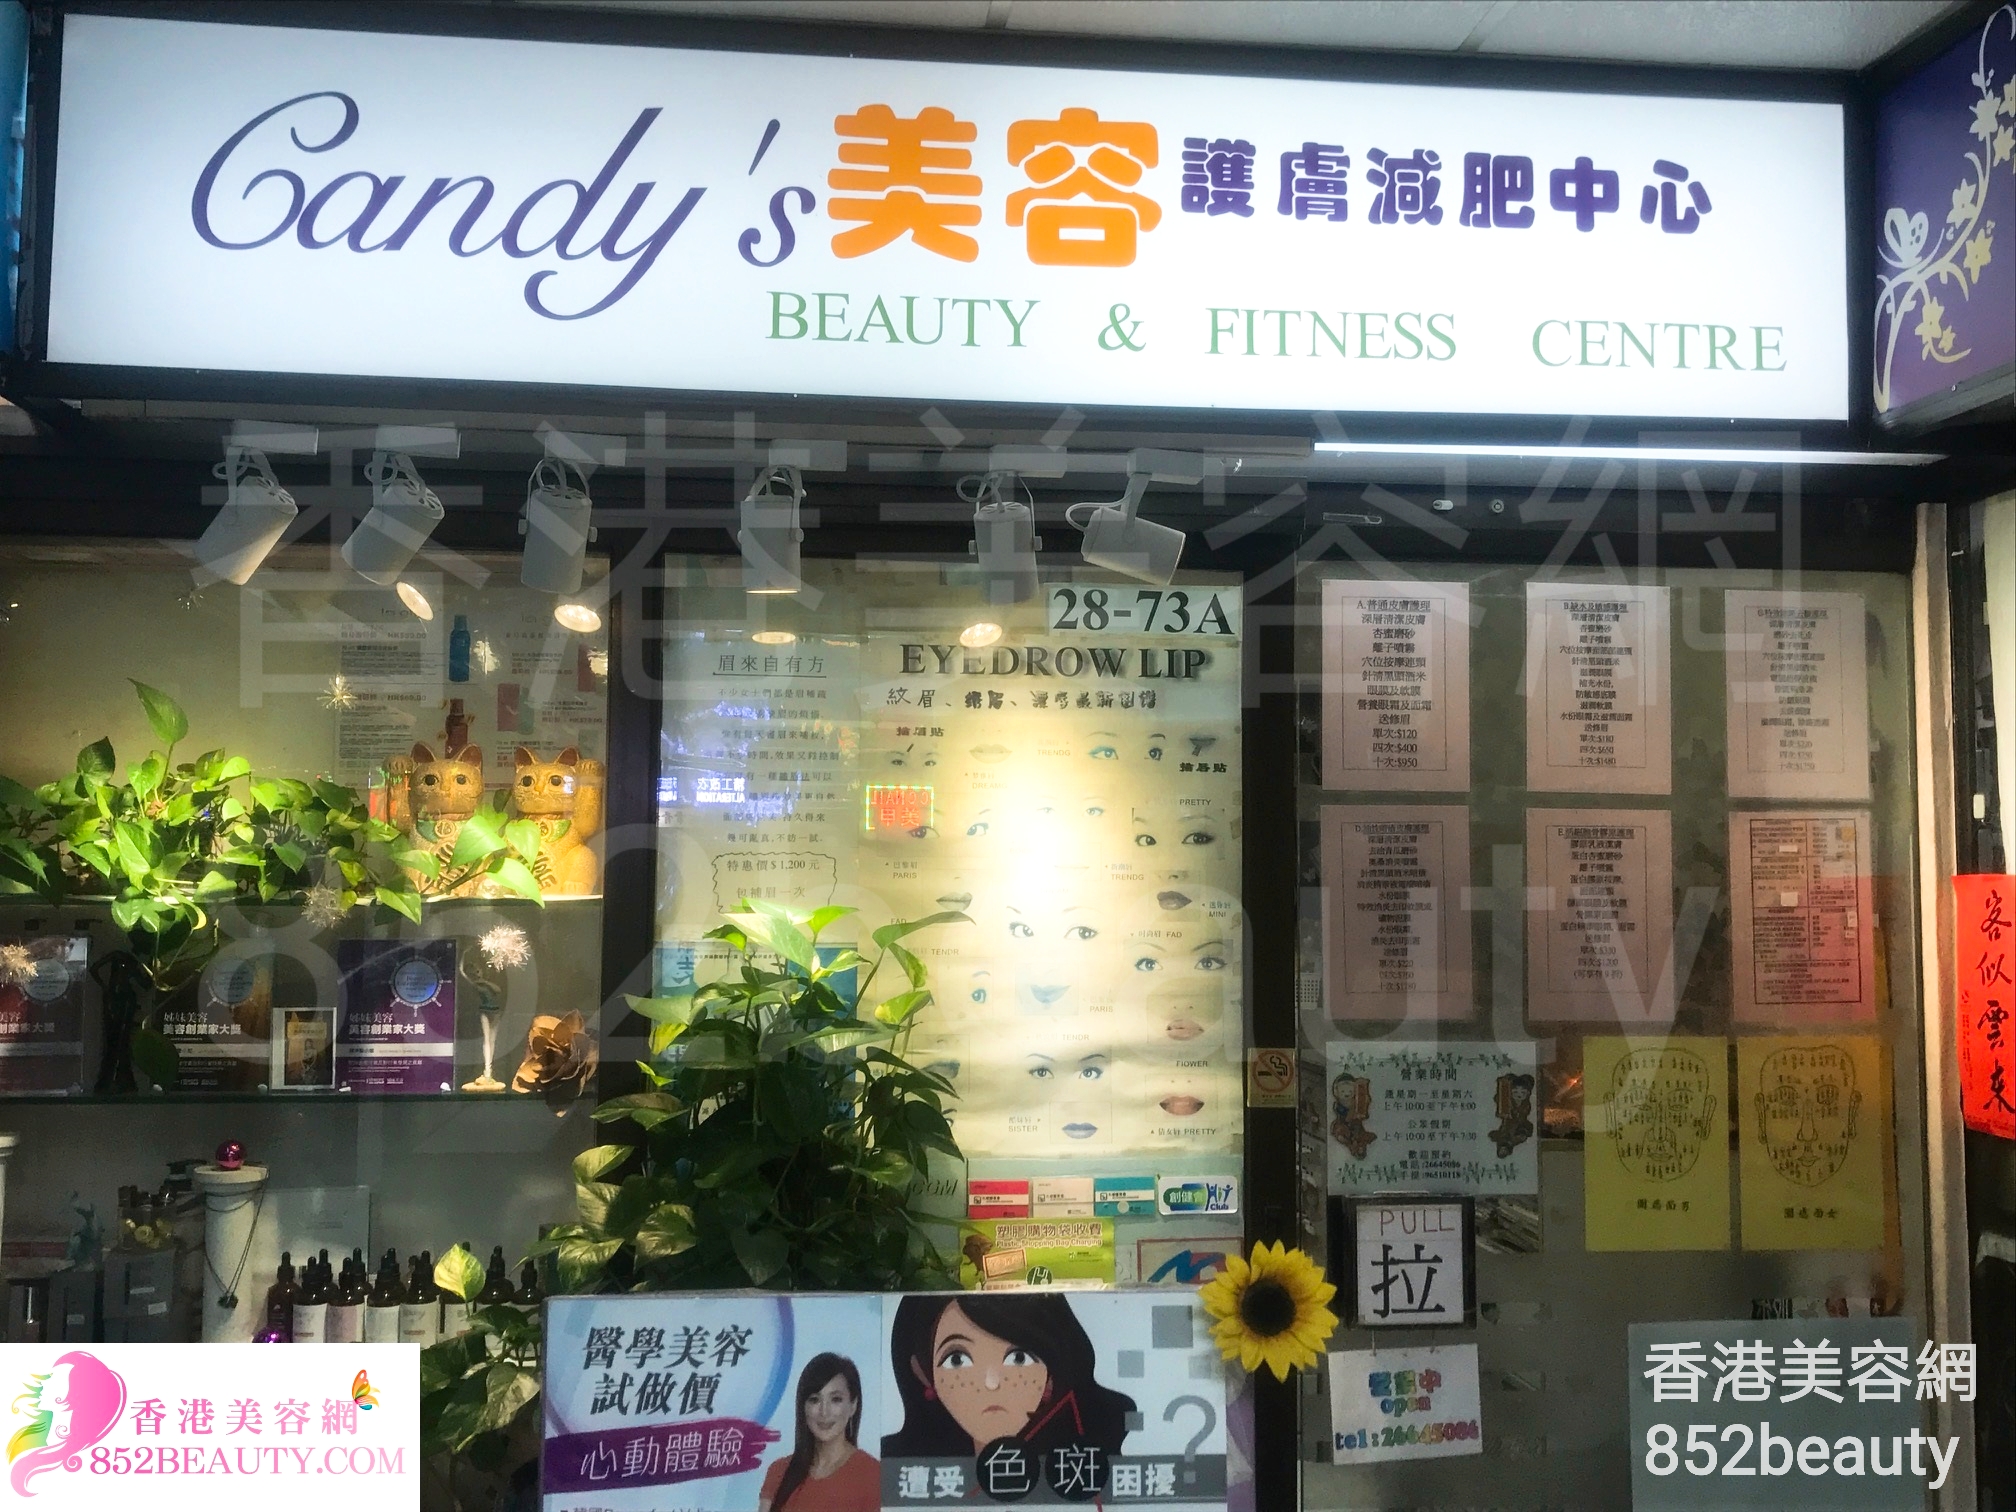 Medical Aesthetics: Candy's 美容護膚減肥中心